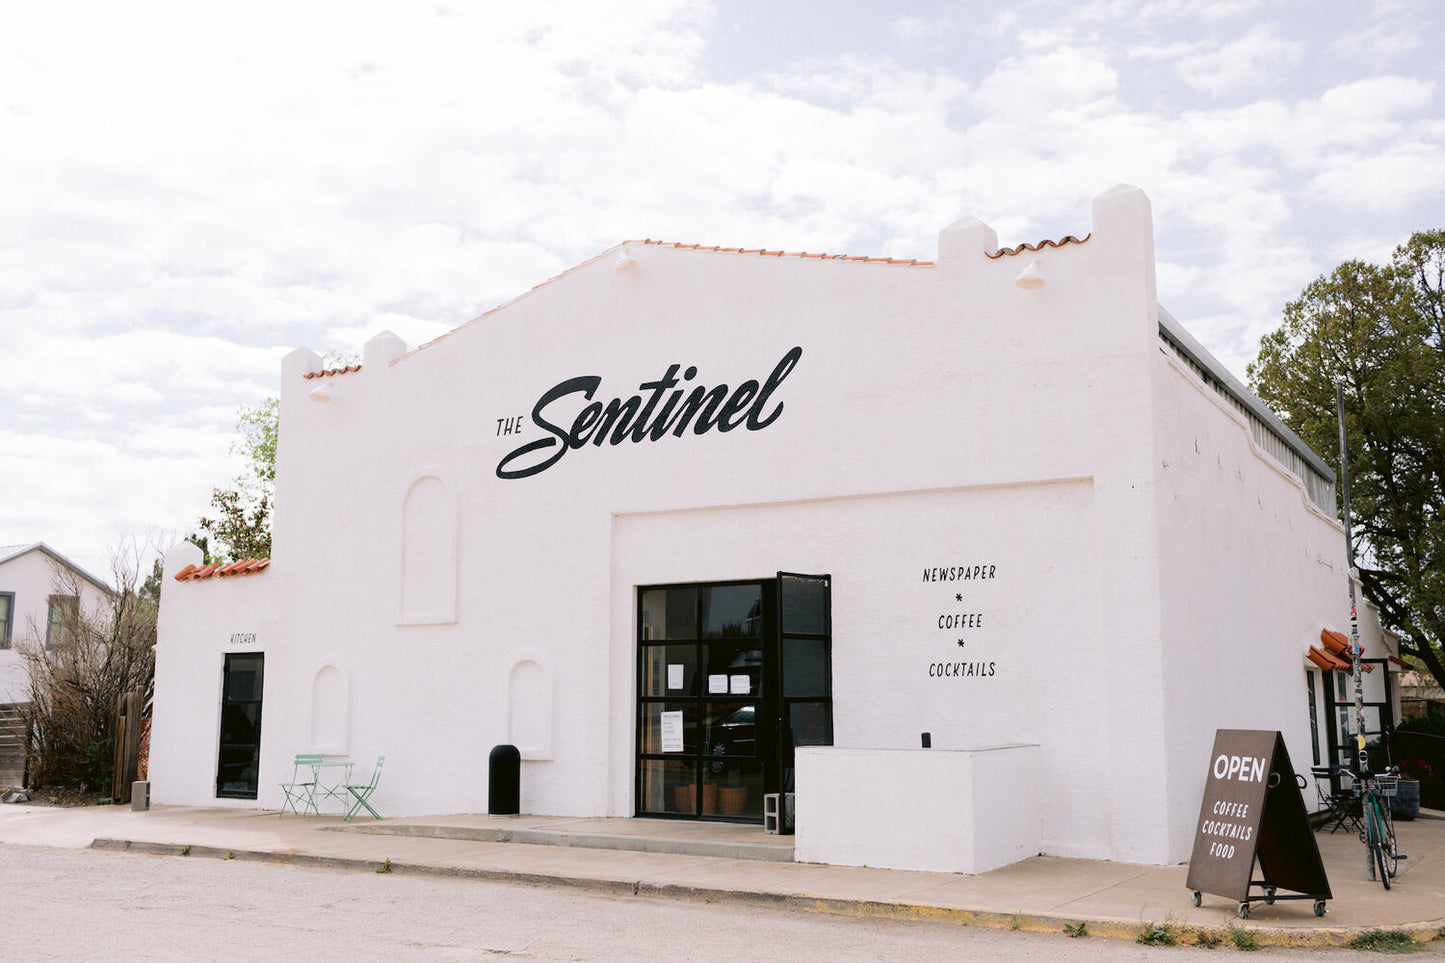 The Sentinel Marfa storefront - newspaper + coffee + cocktails, Marfa TX